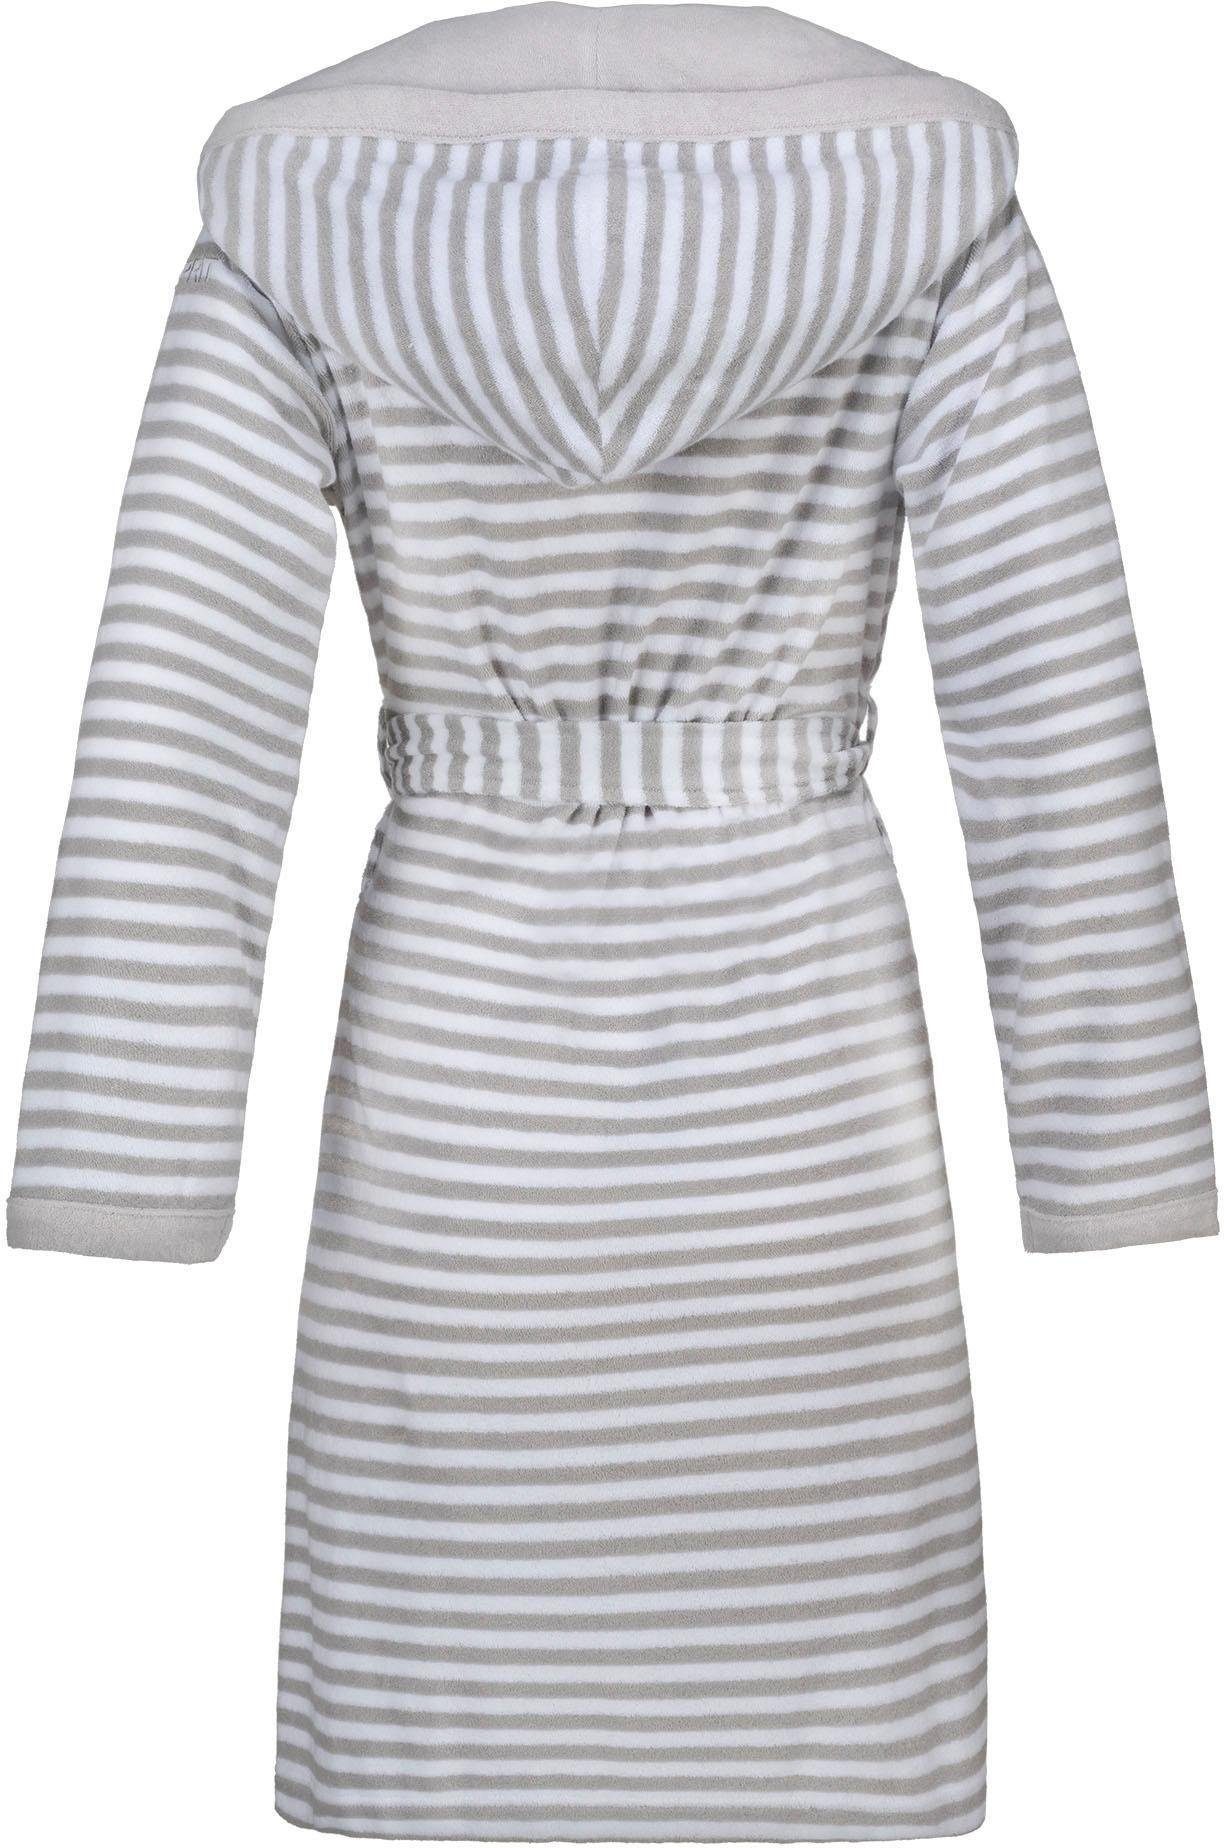 Esprit Damenbademantel Striped gestreift mit Kurzform, stone Hoody, Gürtel, Kapuze, Kapuze, Rundstrickware